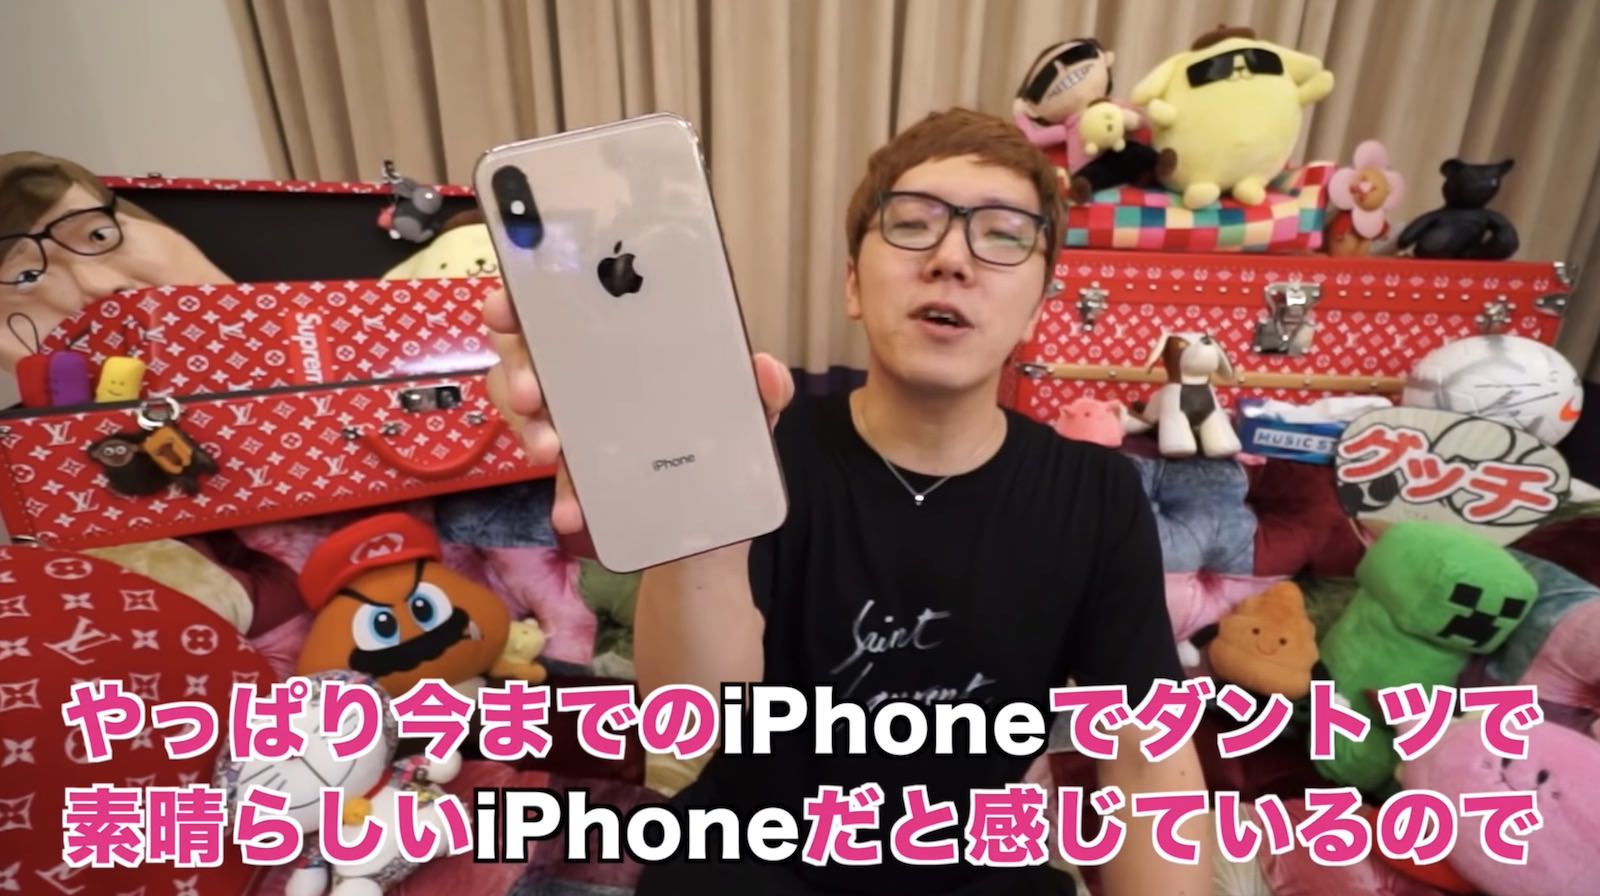 hikakin-iphone-xs-review.jpg